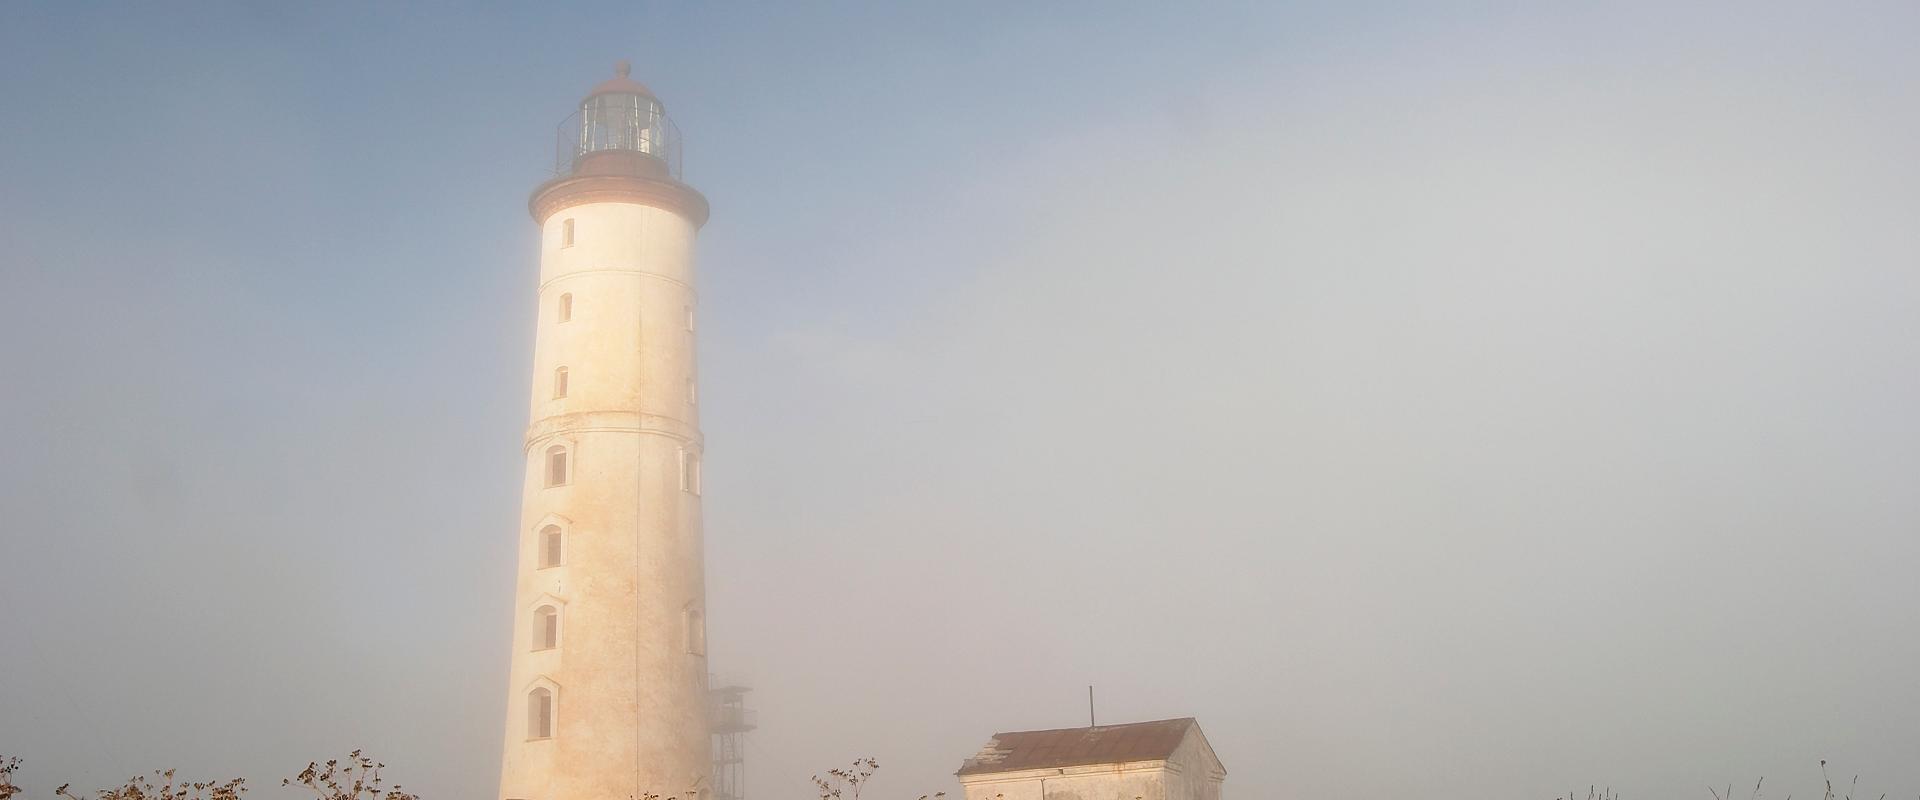 Vilsandi Lighthouse